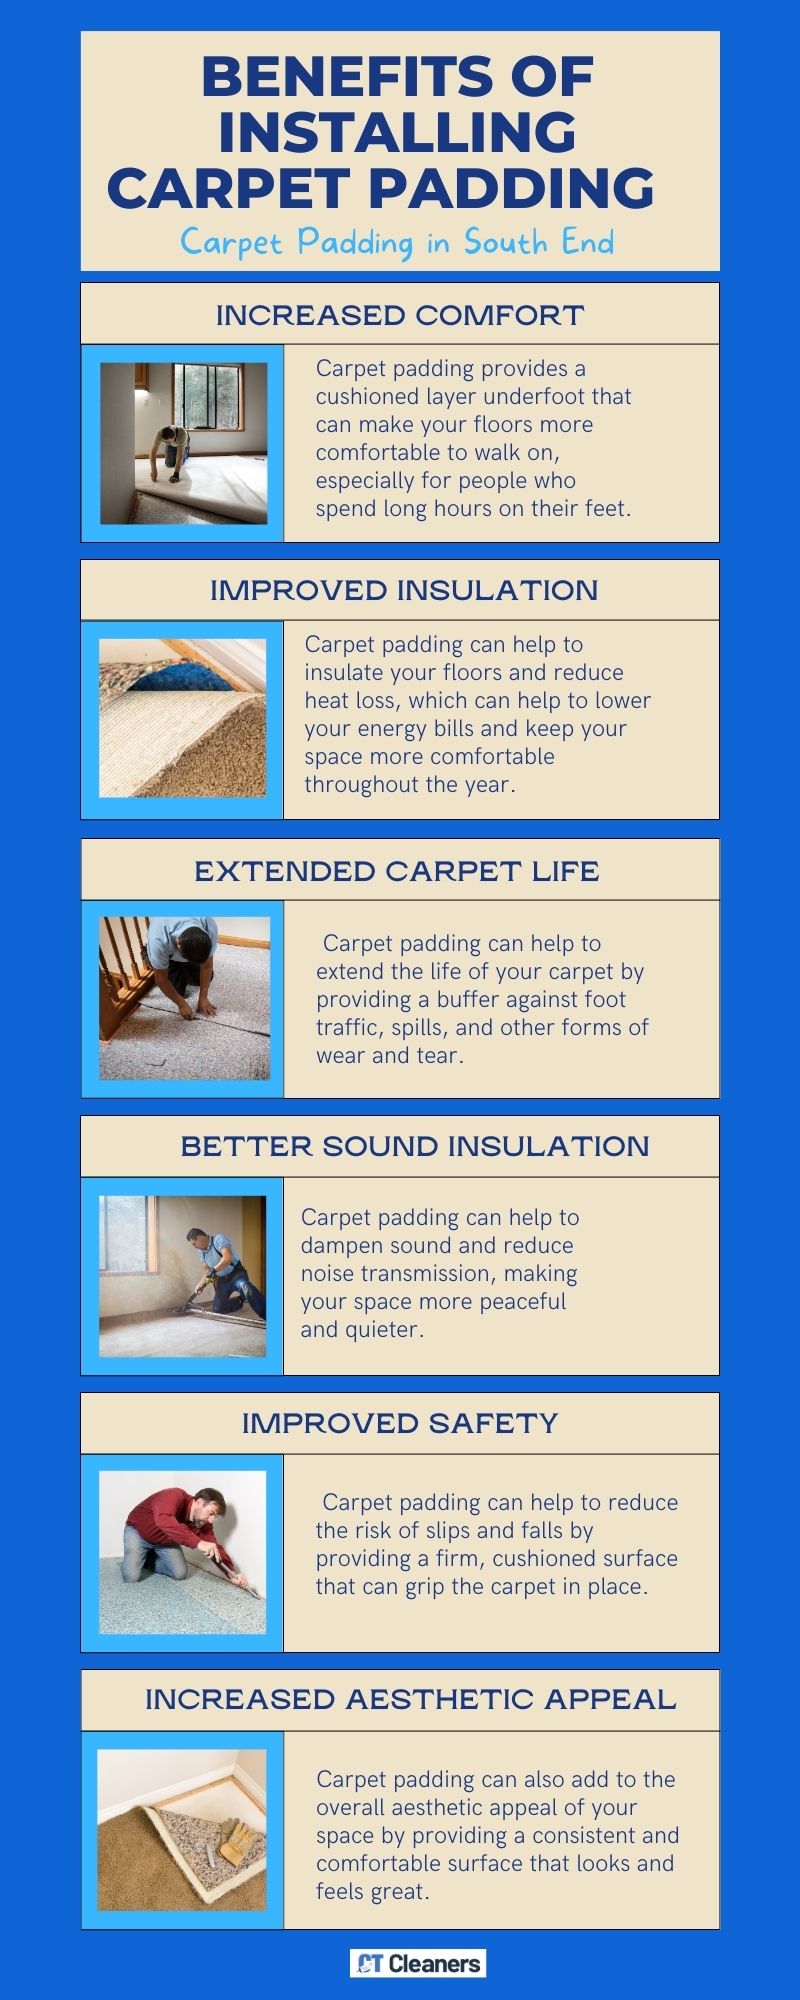 Benefits of Installing Carpet Padding